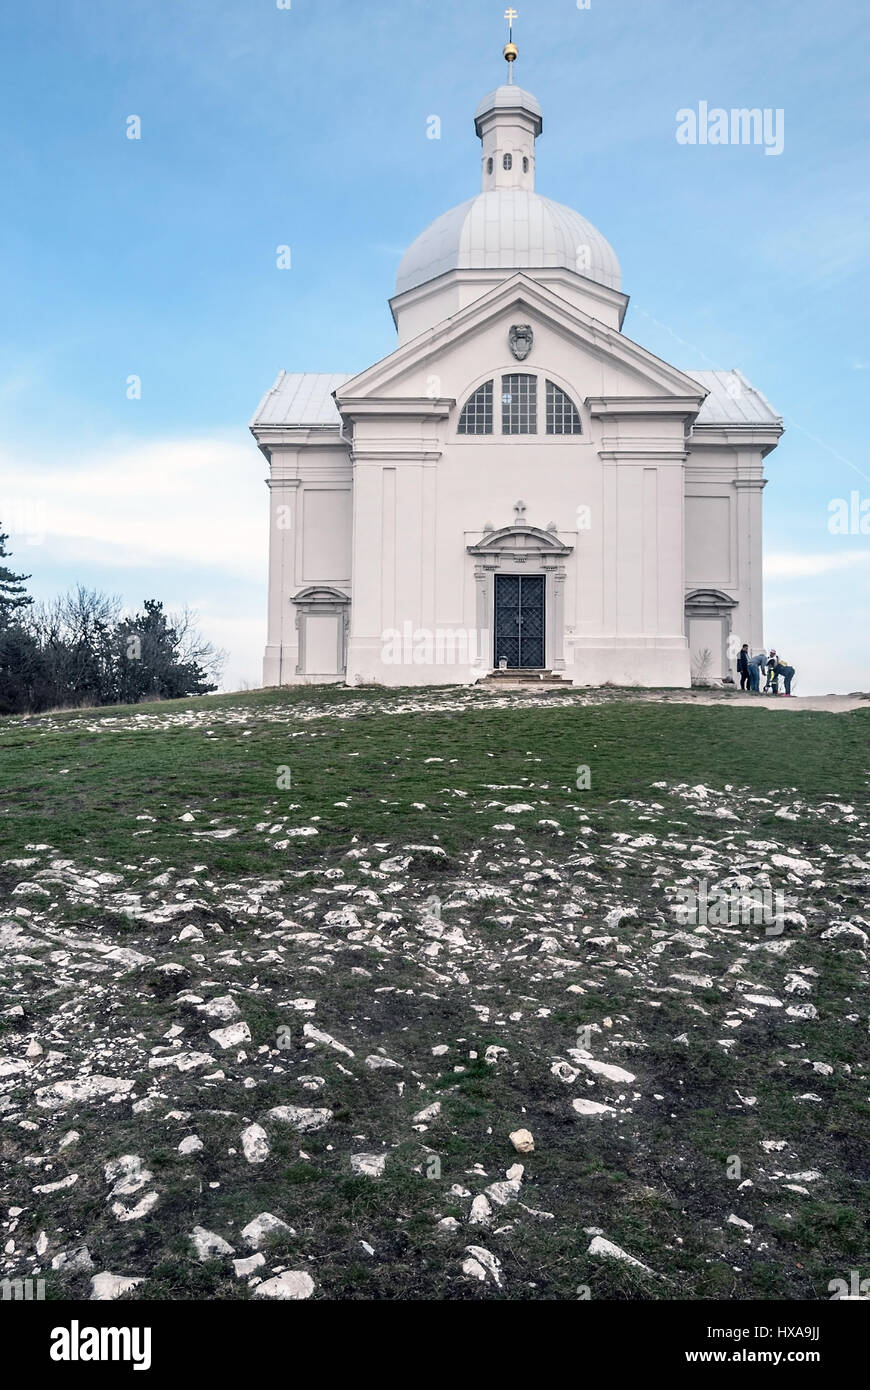 Kaple sv. sebastiana cappella di svaty kopecek collina sopra la città di Mikulov palava in montagna in Moravia del sud Foto Stock